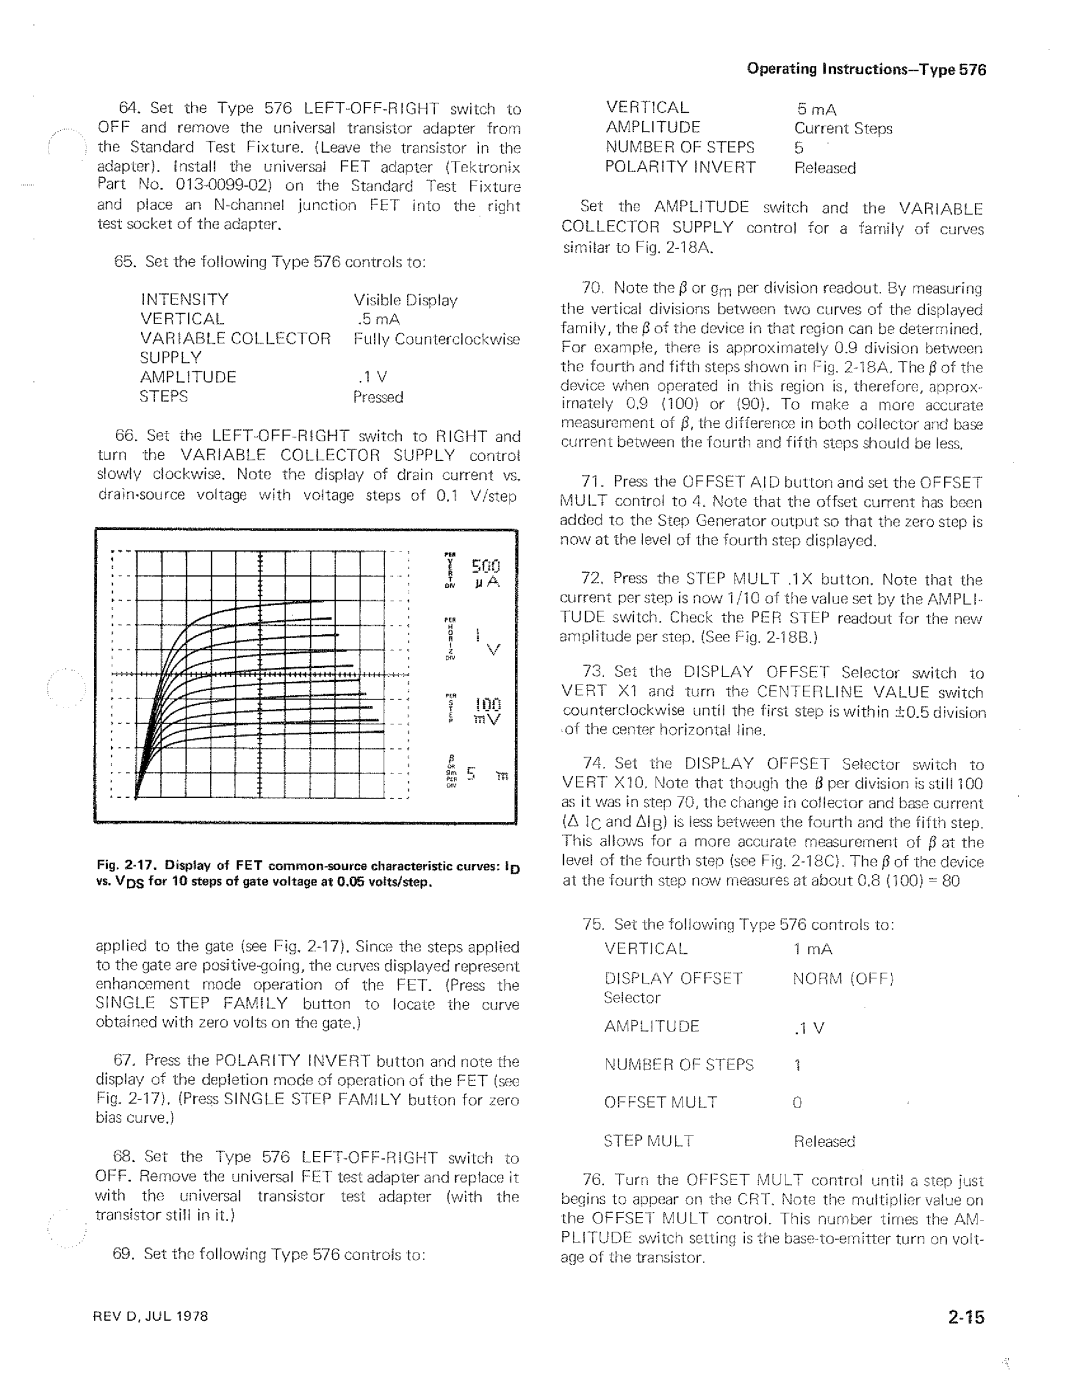 Tektronix 576 manual 